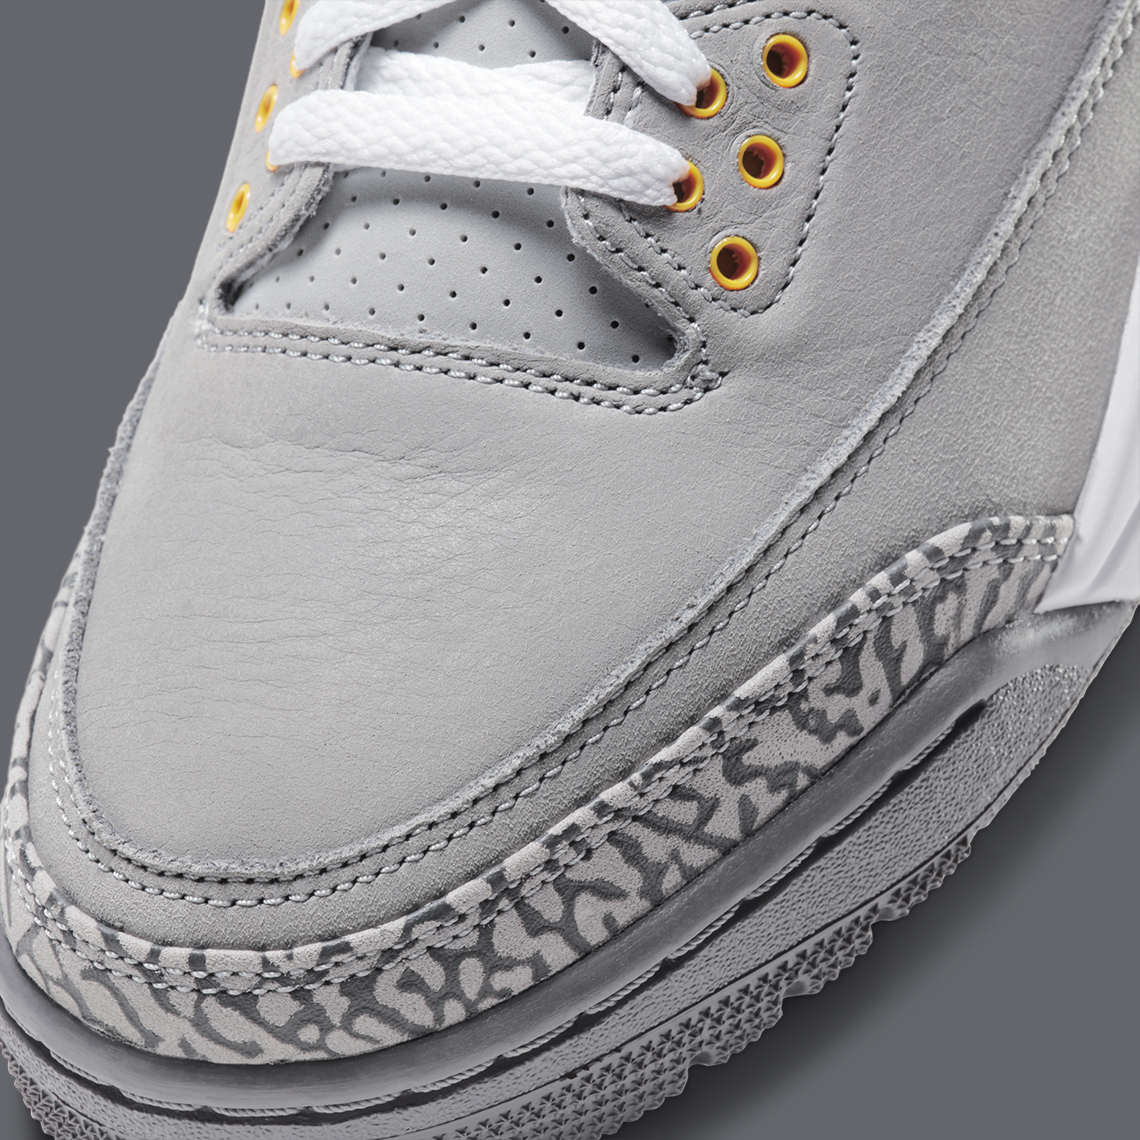 Air Jordan 3 Cool Grey 2021 Release Info Adult Kids | SneakerNews.com